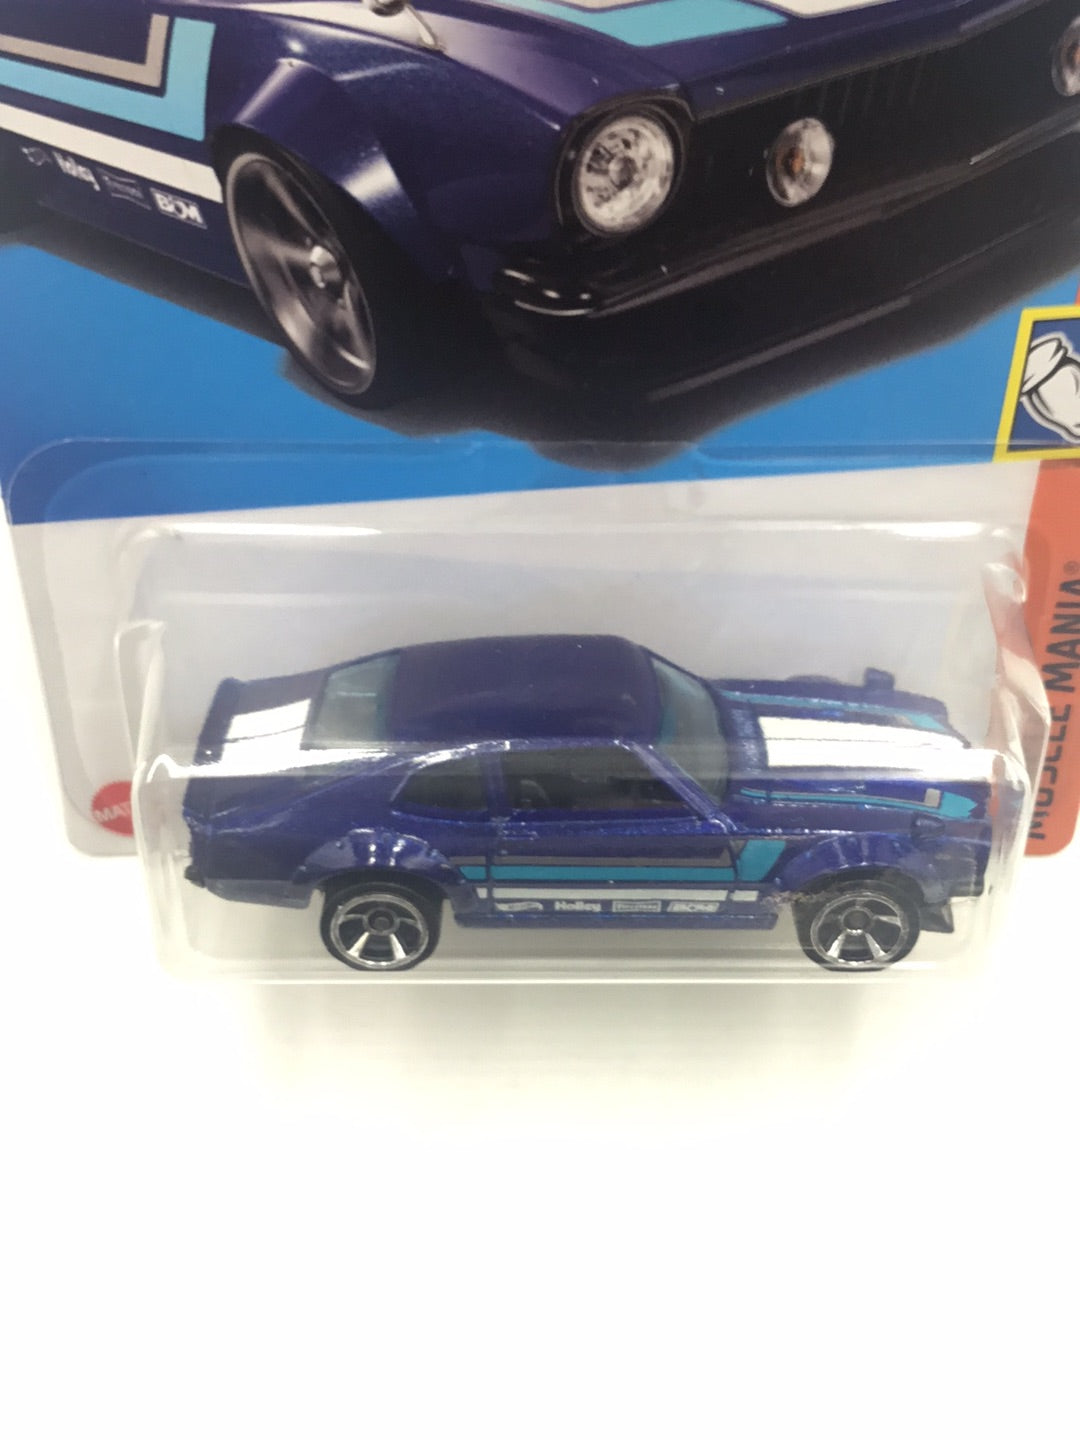 2023 hot wheels #99 Custom Ford Maverick Dollar General exclusive nn1